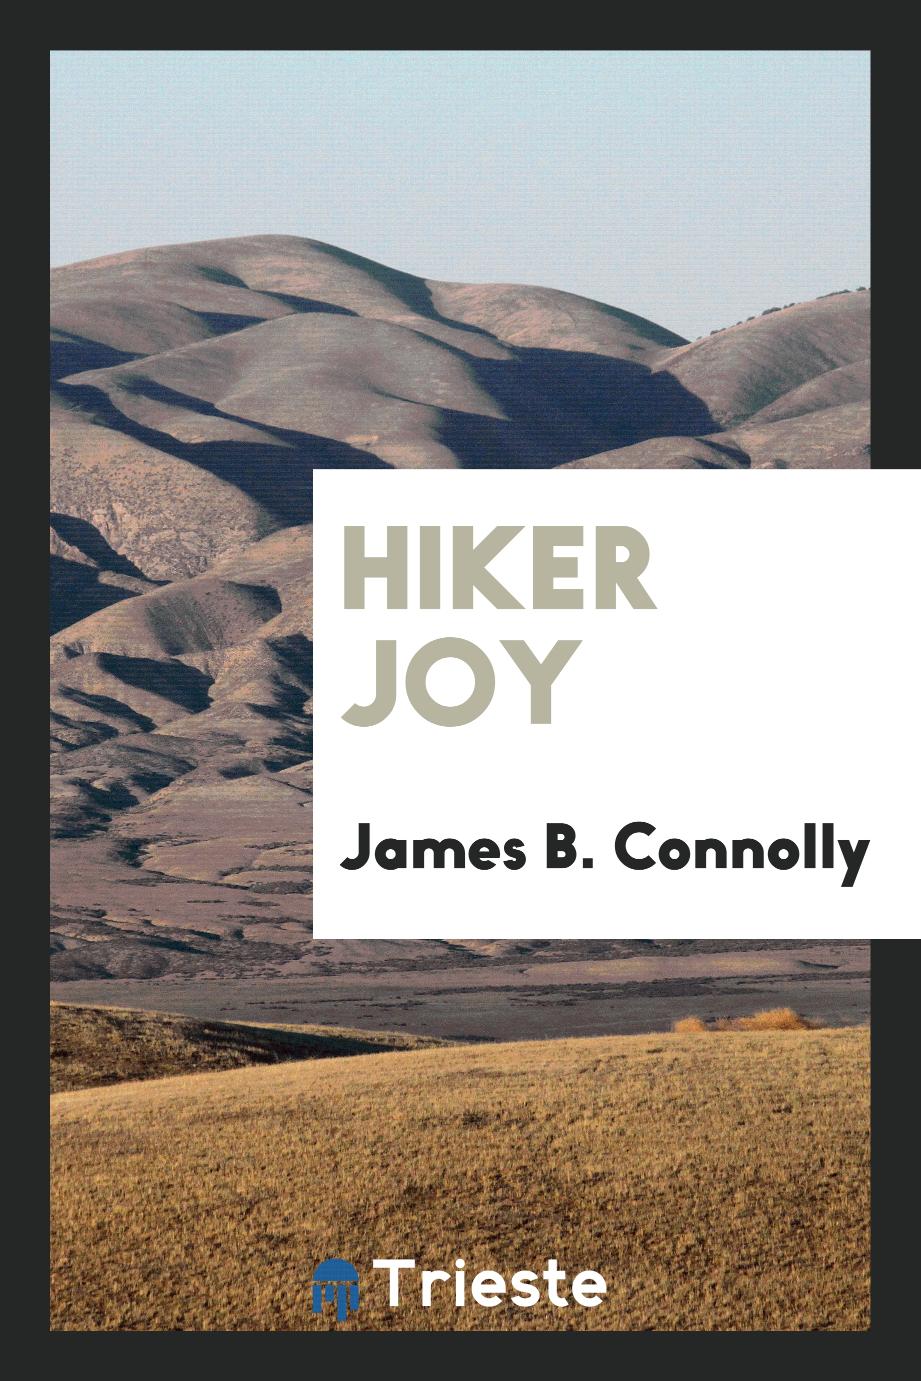 Hiker Joy